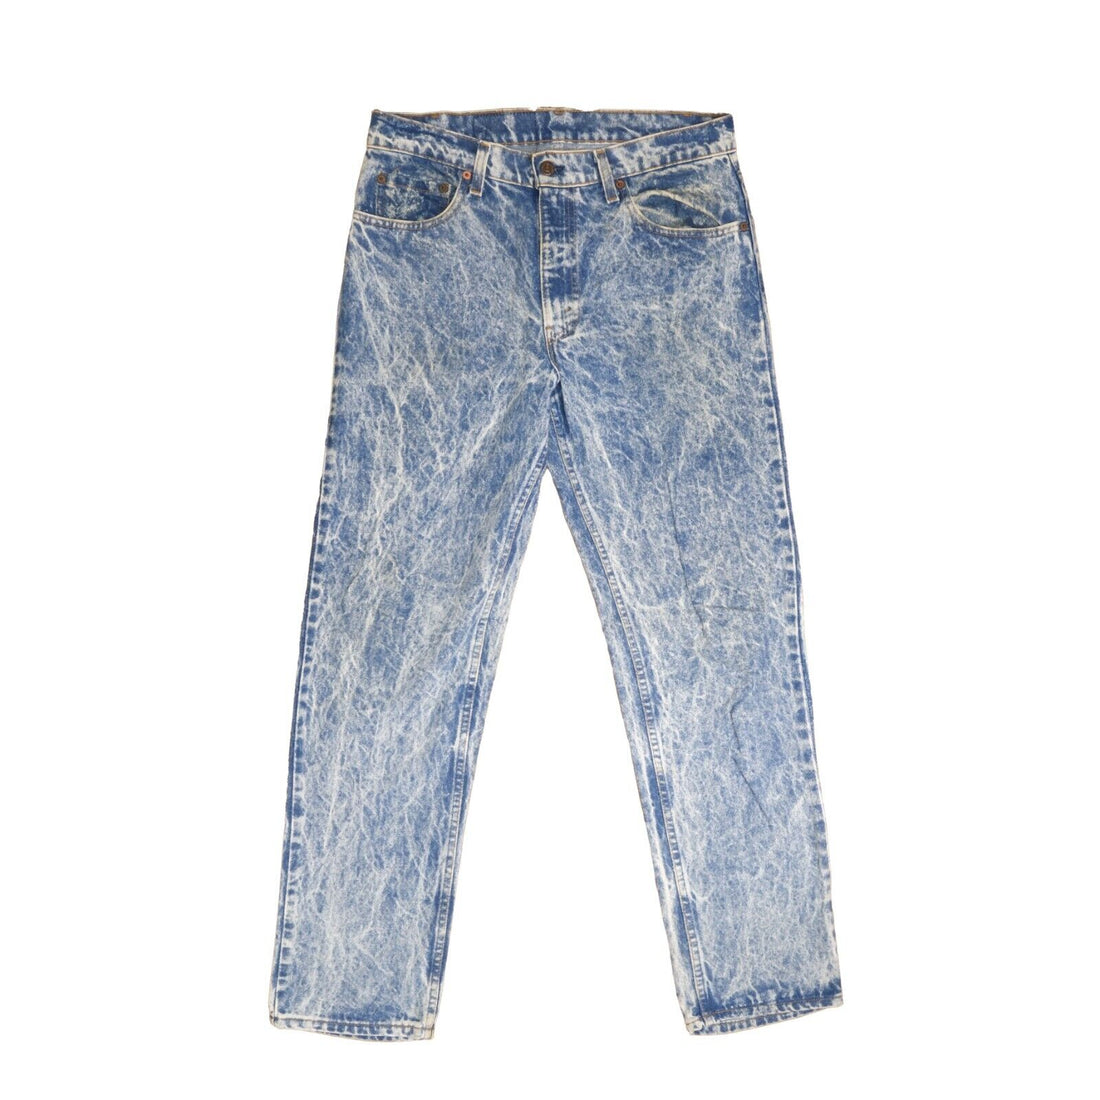 Vintage Levi Strauss & Co Acid Wash Denim Jeans Size 34 X 32 506 0209